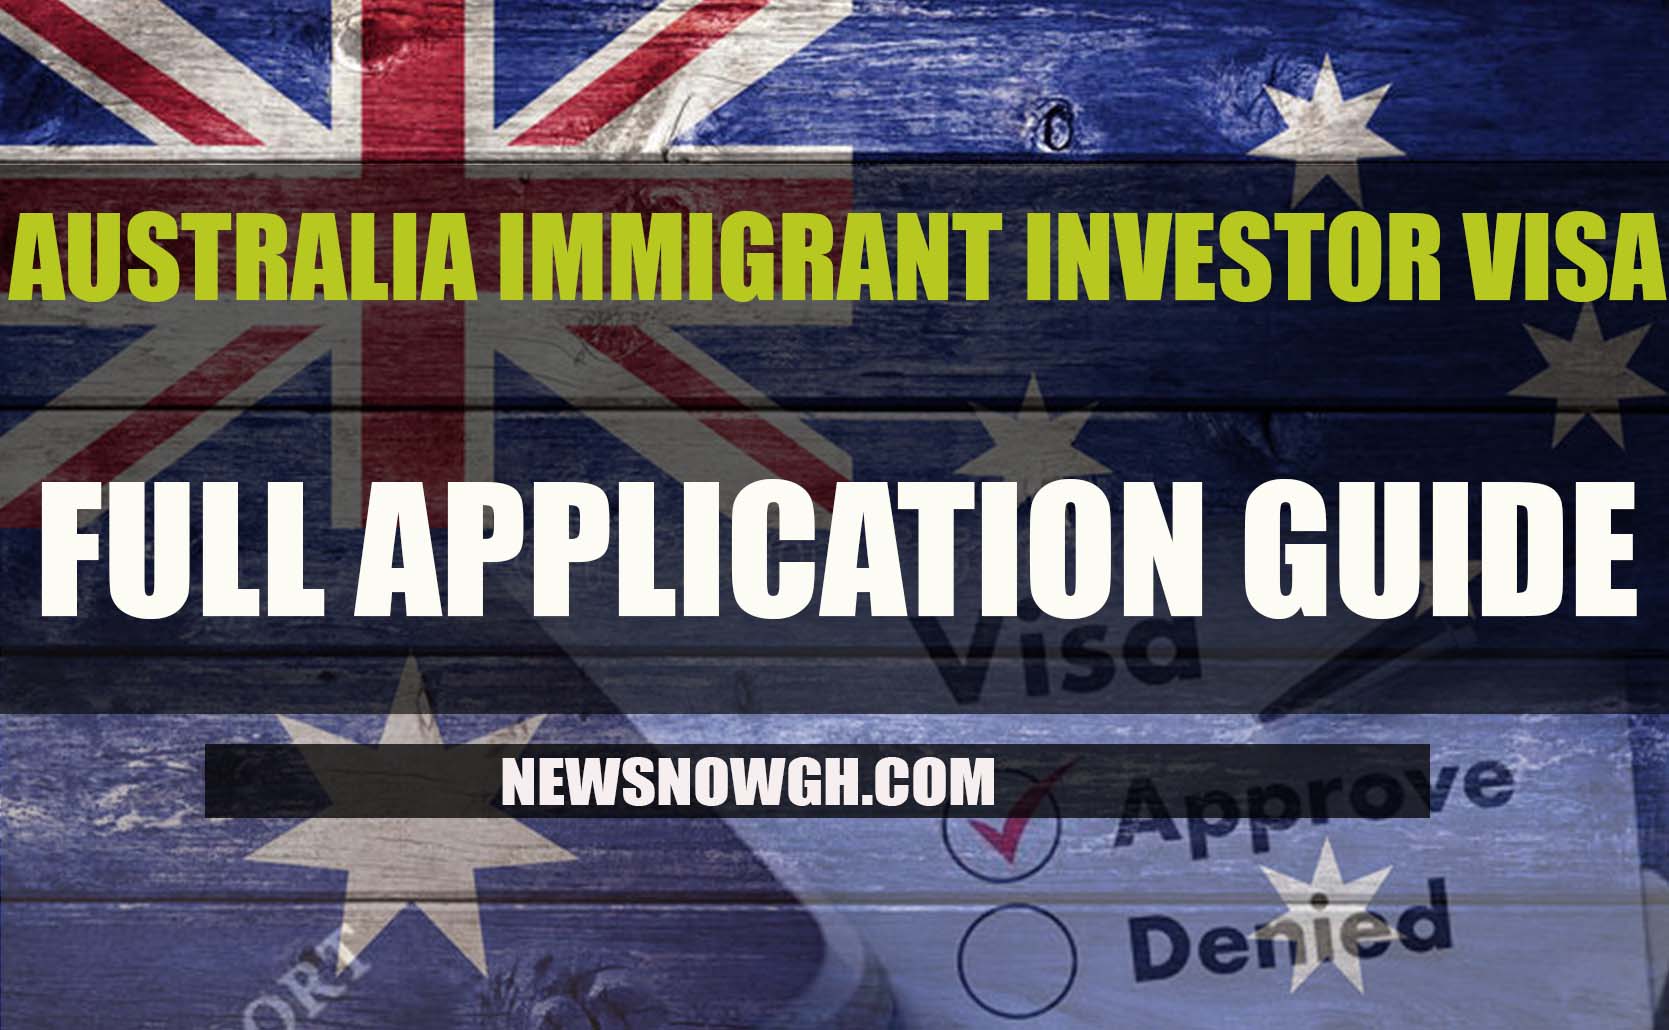 Australia Immigrant Investor Visa Full Application Guide 8000